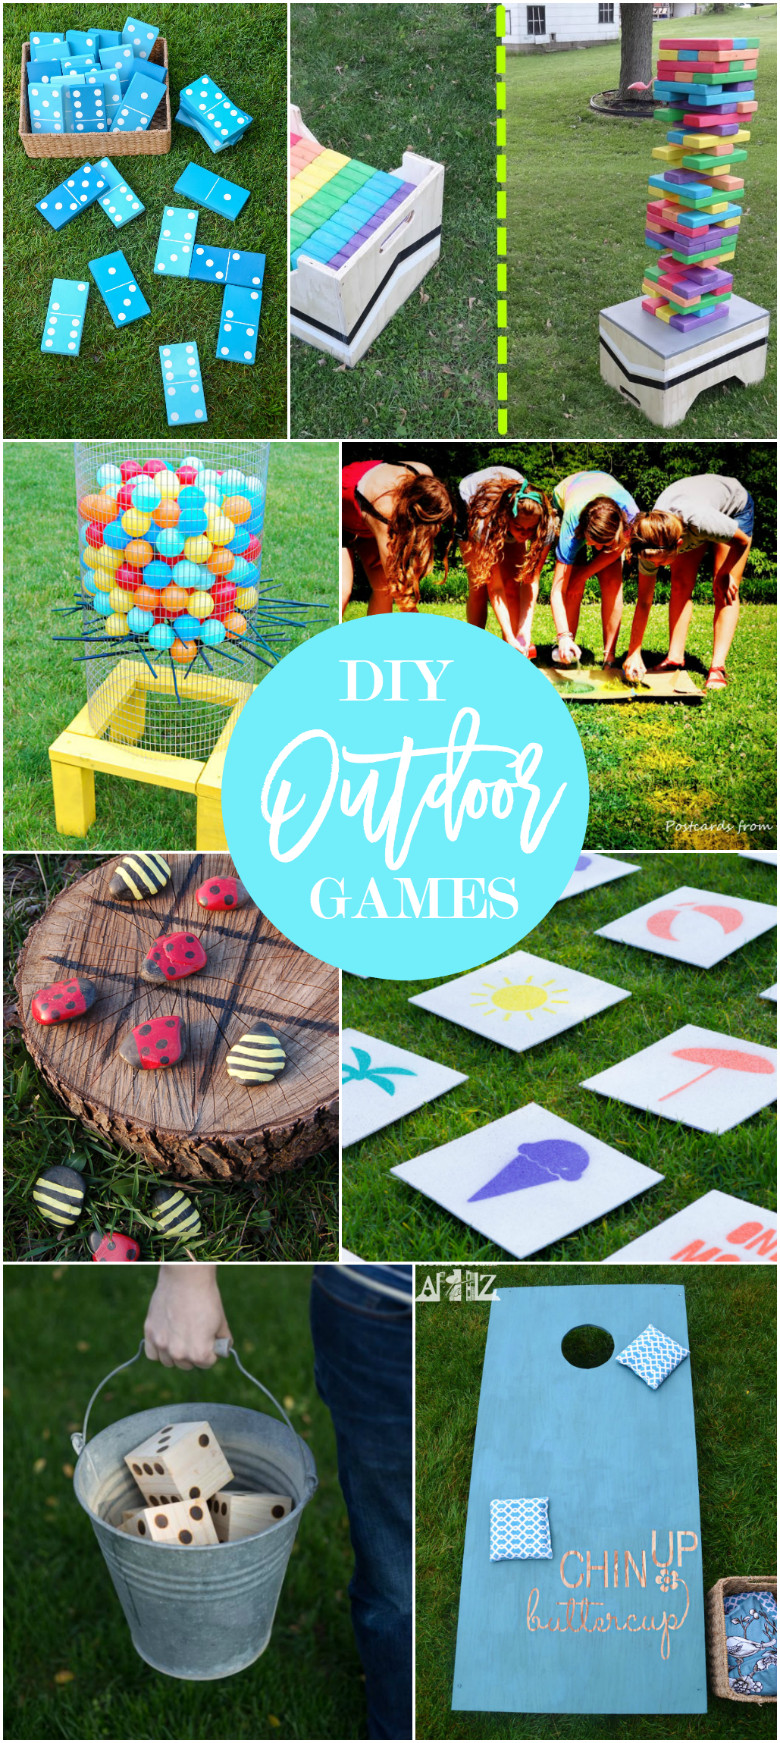 DIY Outdoor Games For Kids
 17 DIY Games for Outdoor Family Fun